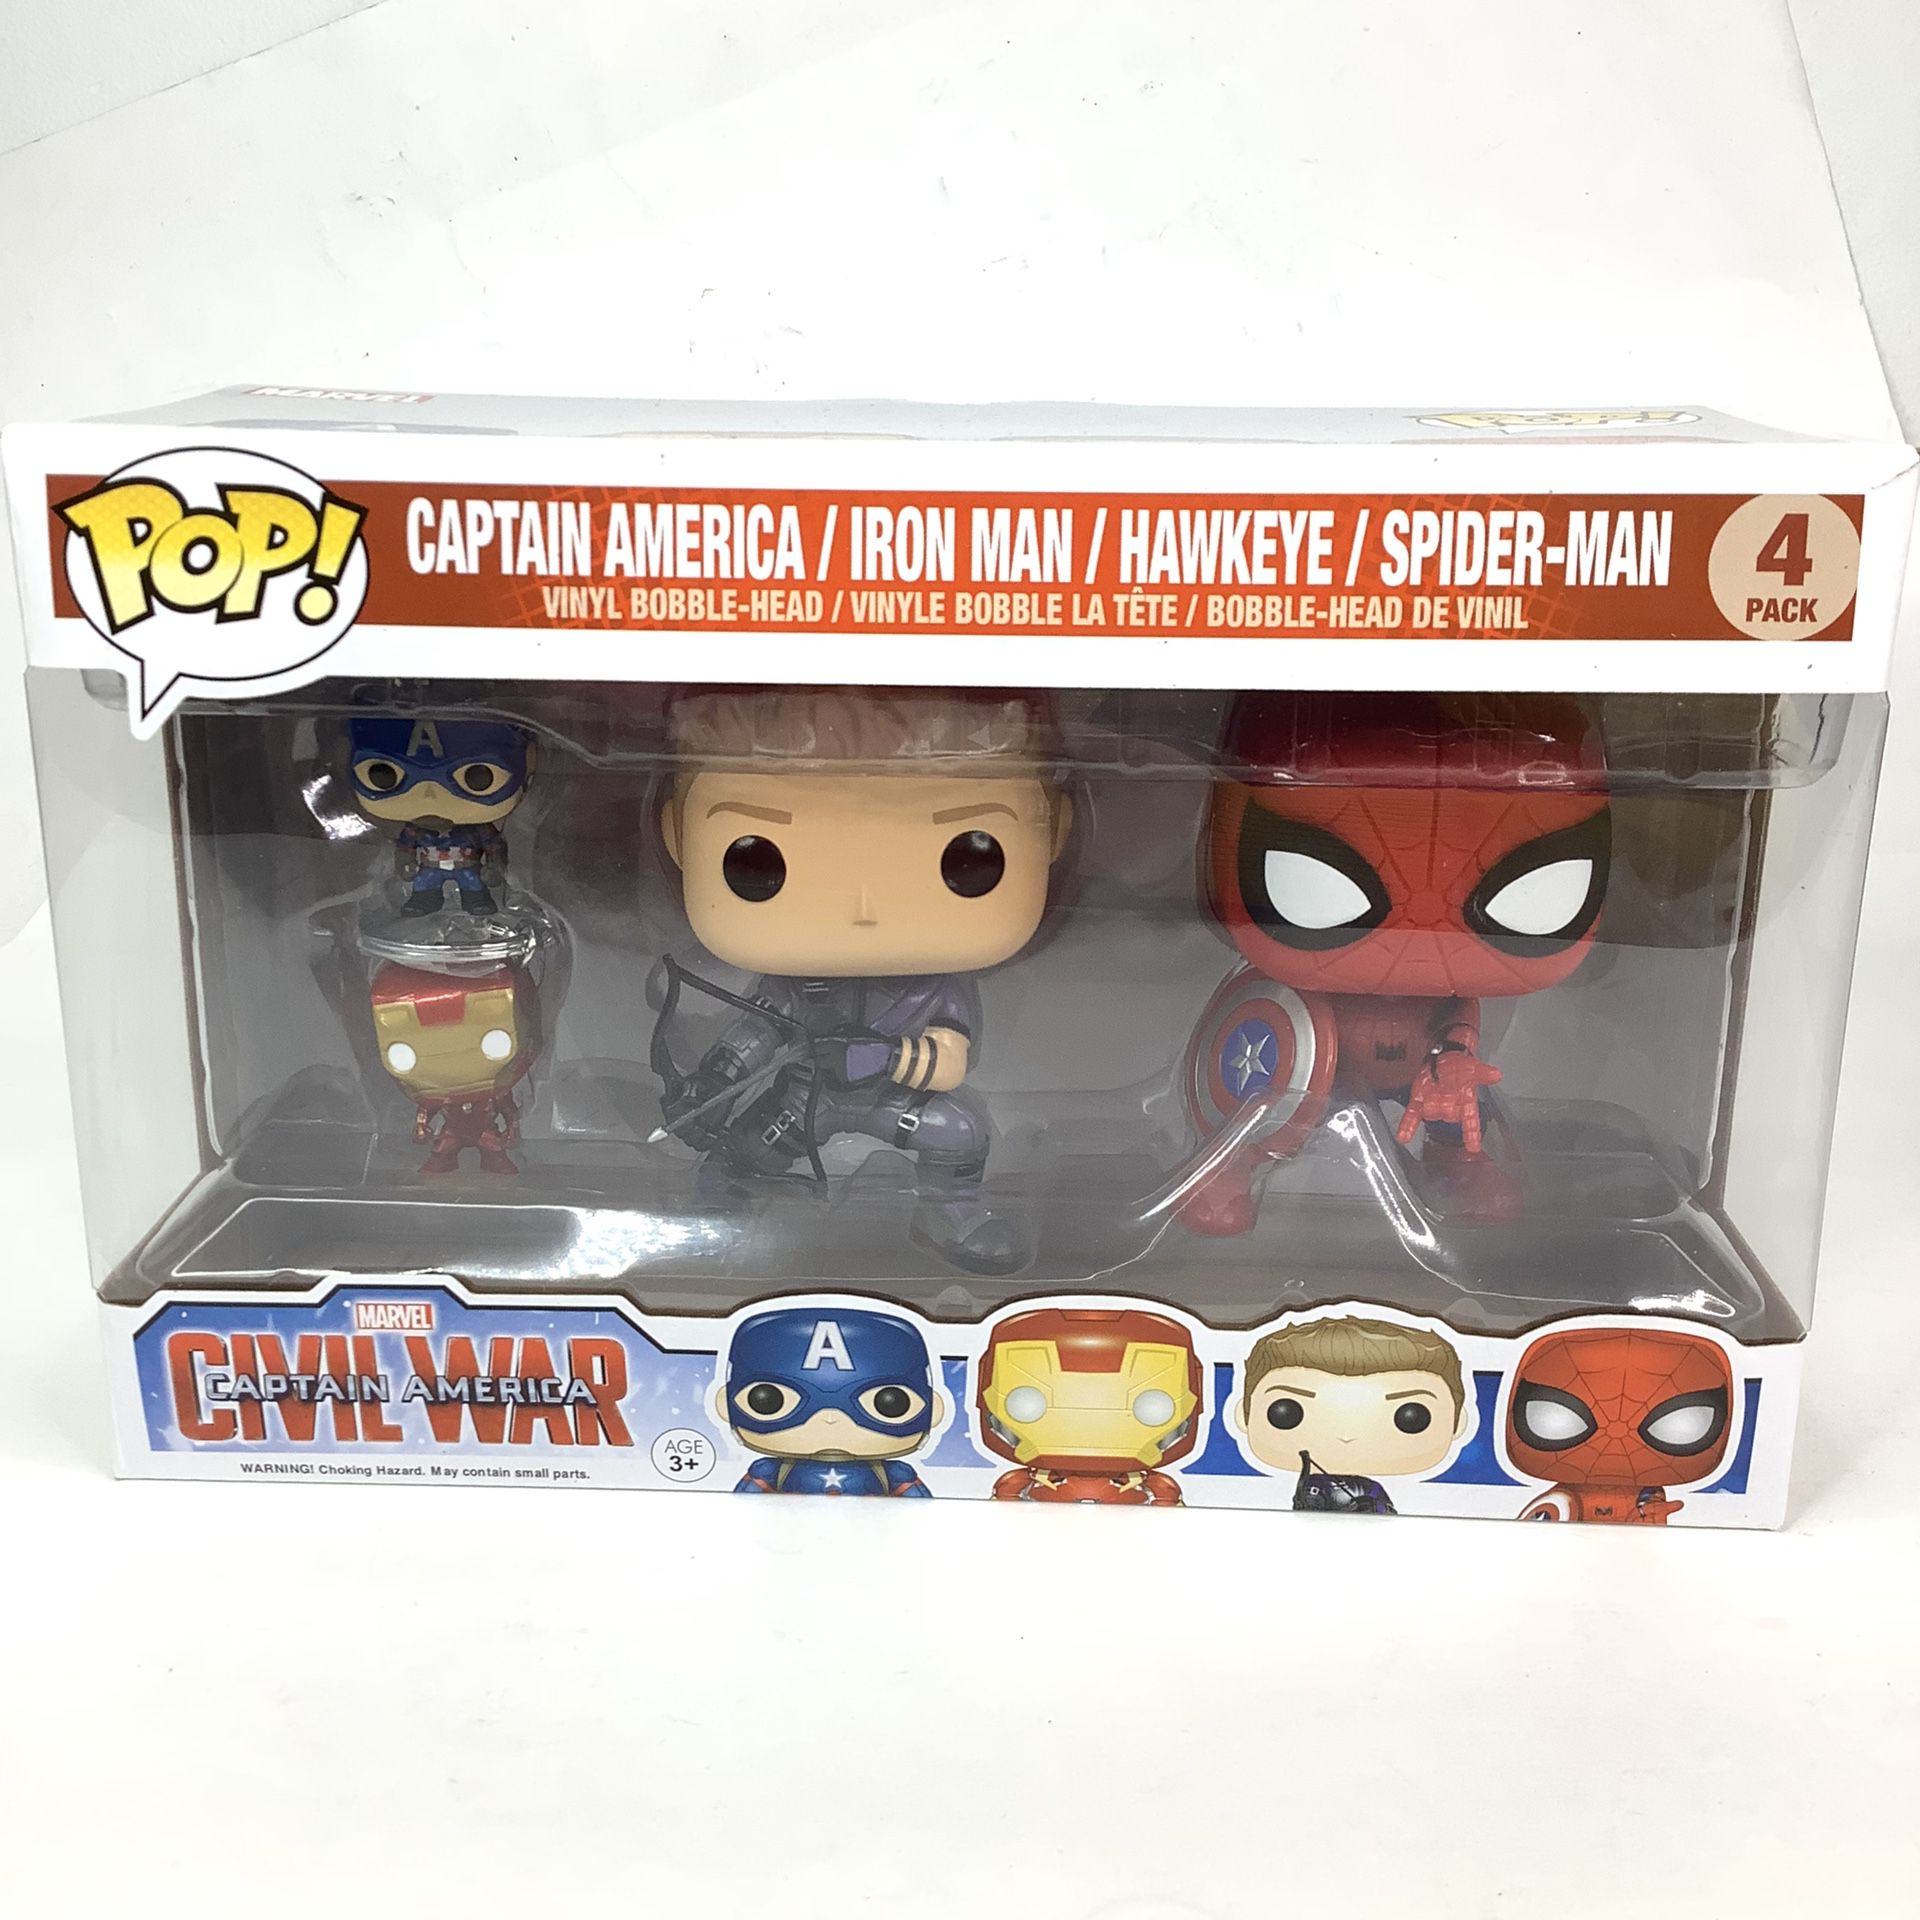 Funko Pop! Captain America / Iron Man / Spider-Man / Hawkeye Vinyl Bobblehead 